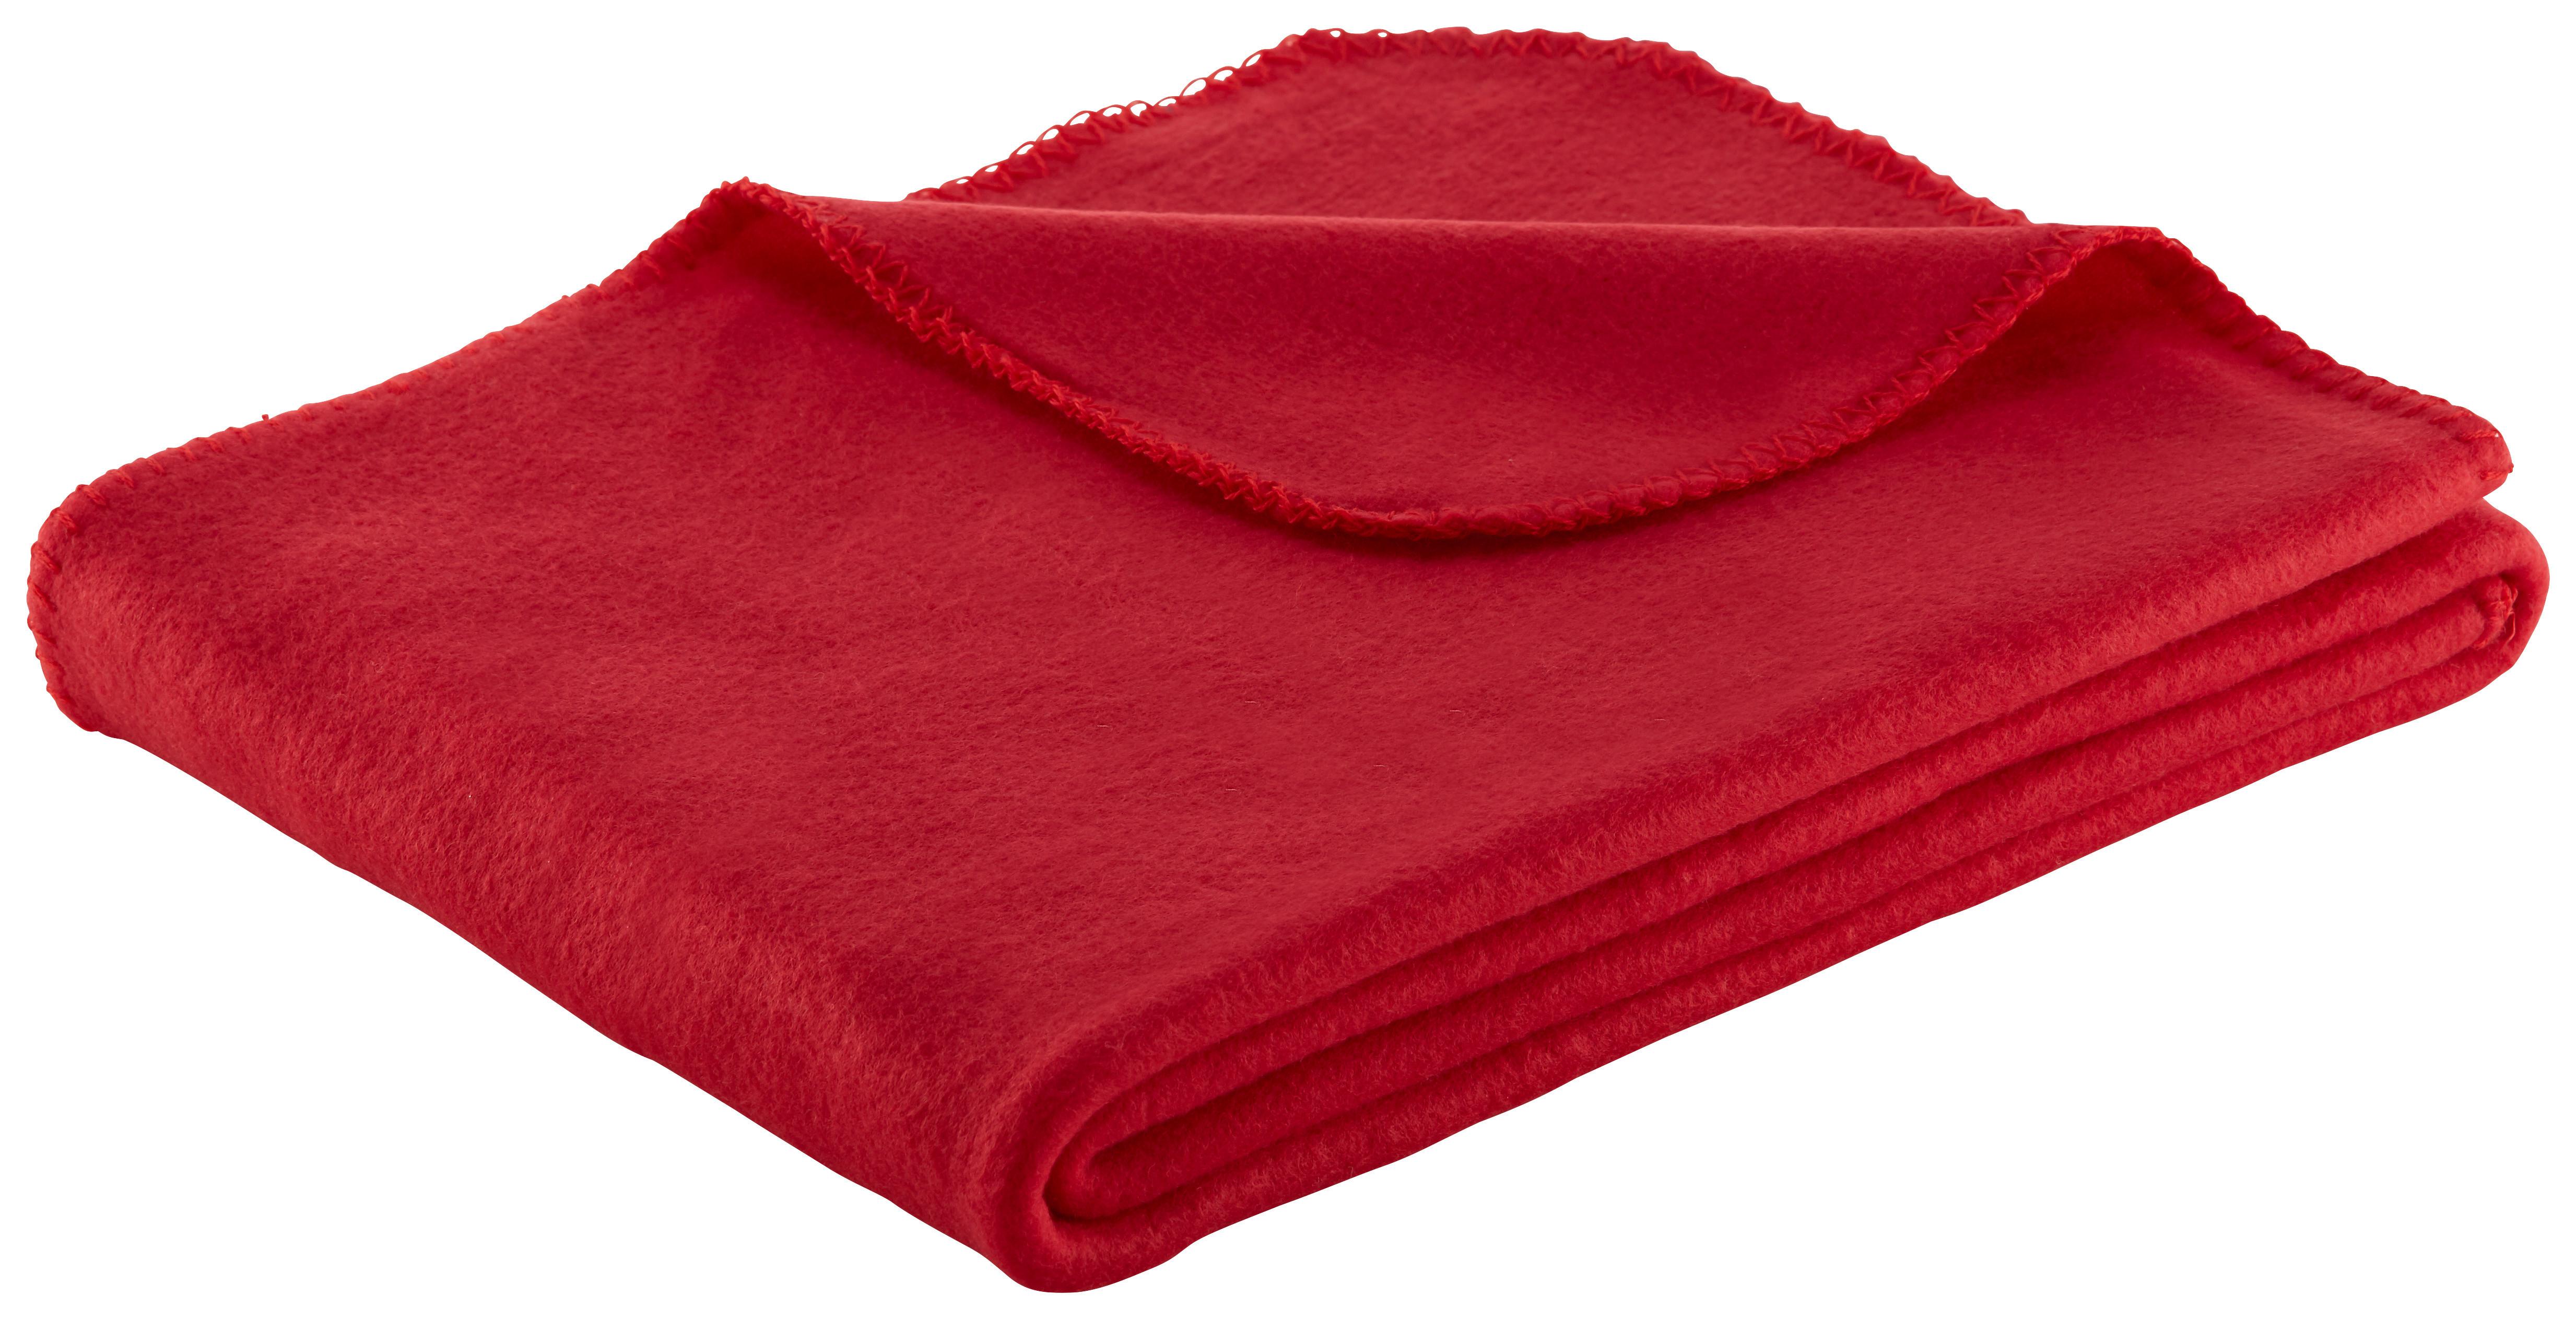 Fleecová Deka Beatrix 130/160 Cm - červená, textil (130/160cm) - Based